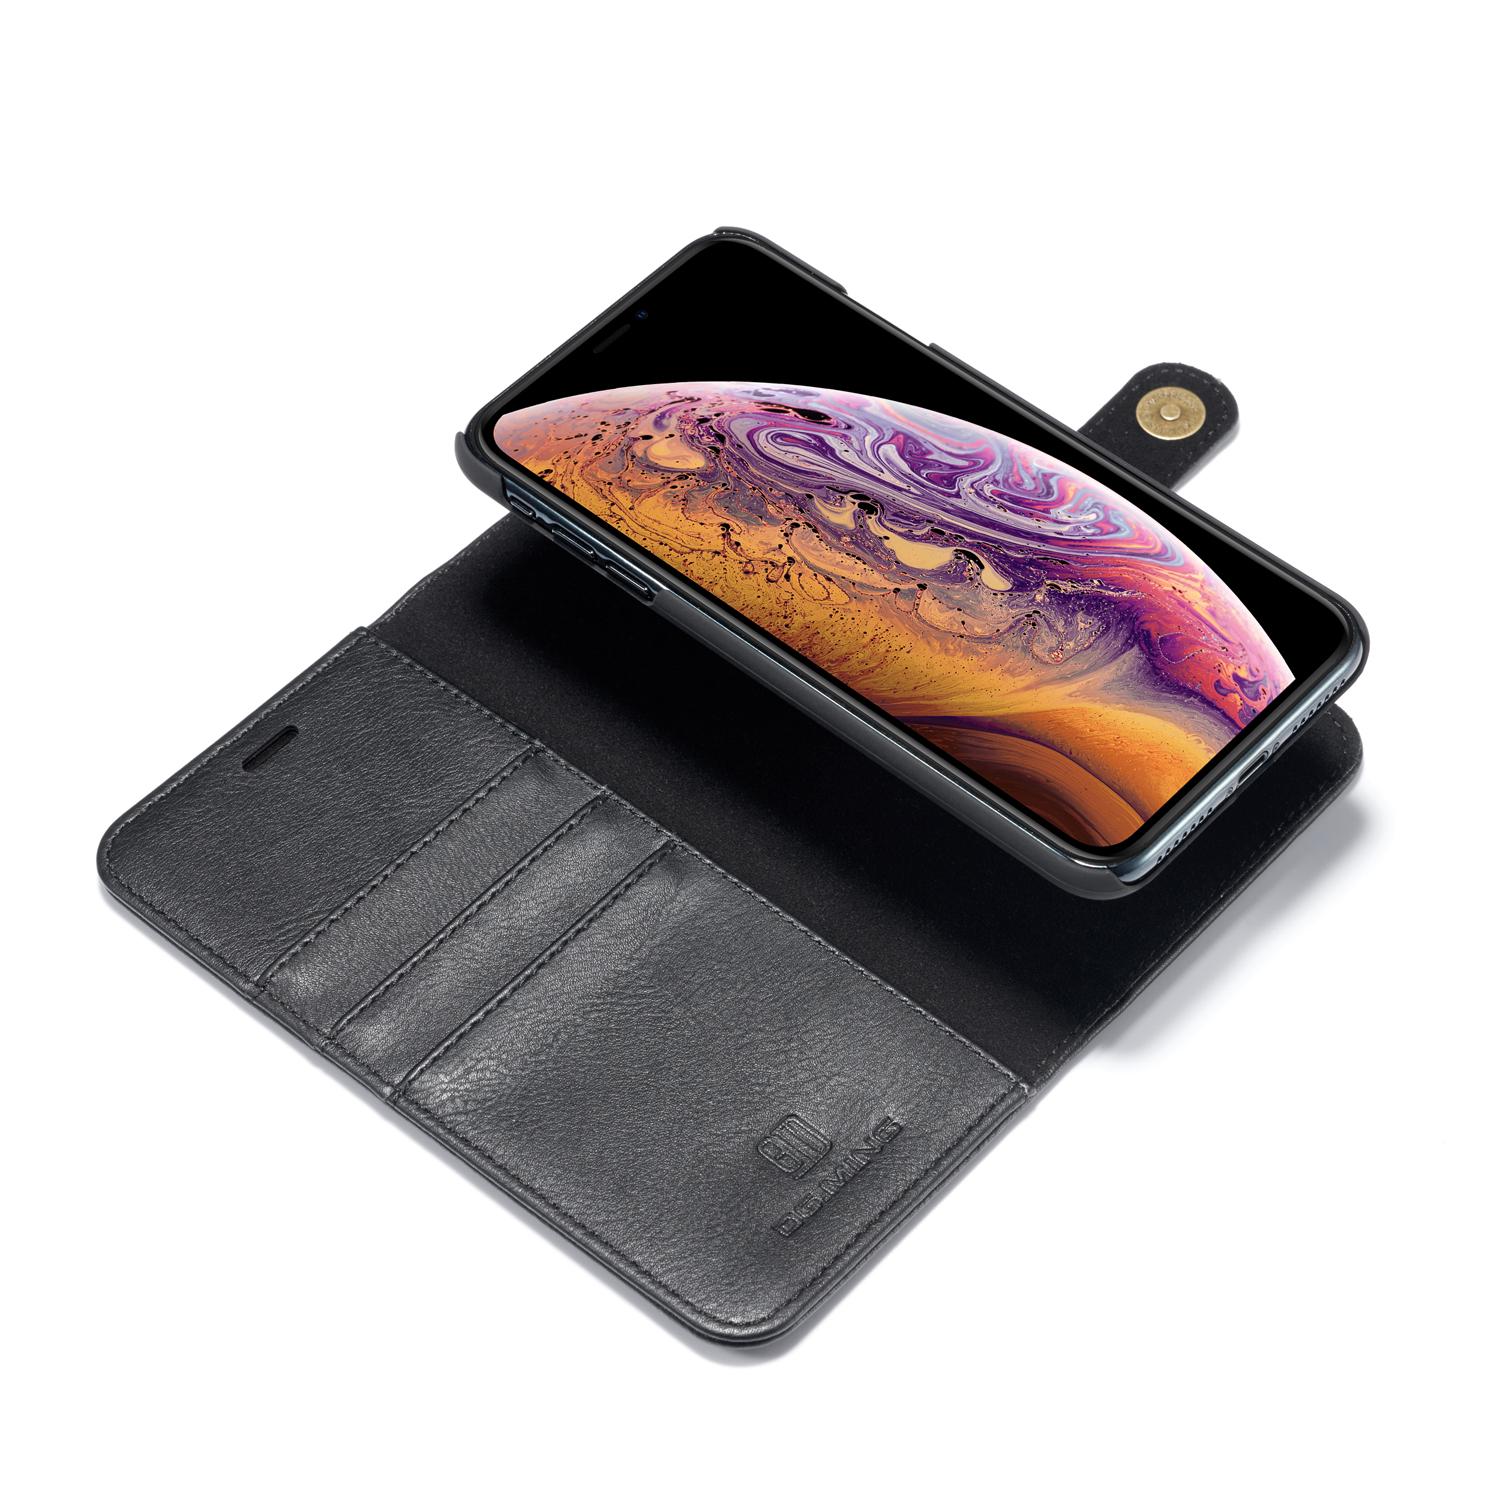 Magnet Wallet iPhone XS Max Black